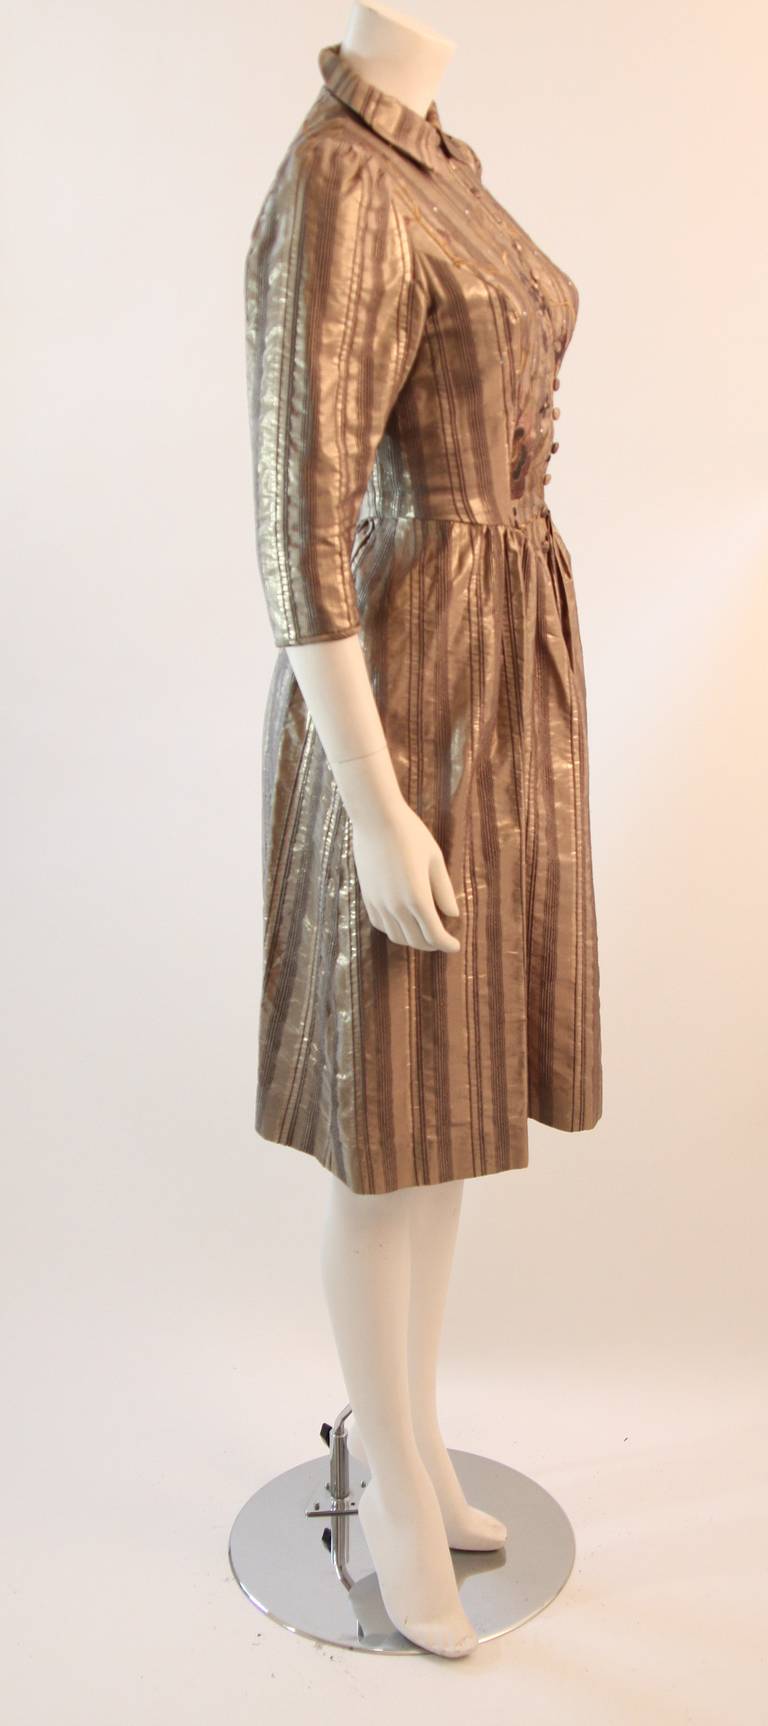 Women's Caroline Charles London Metallic Embroidered rhinestone Dress Size 8